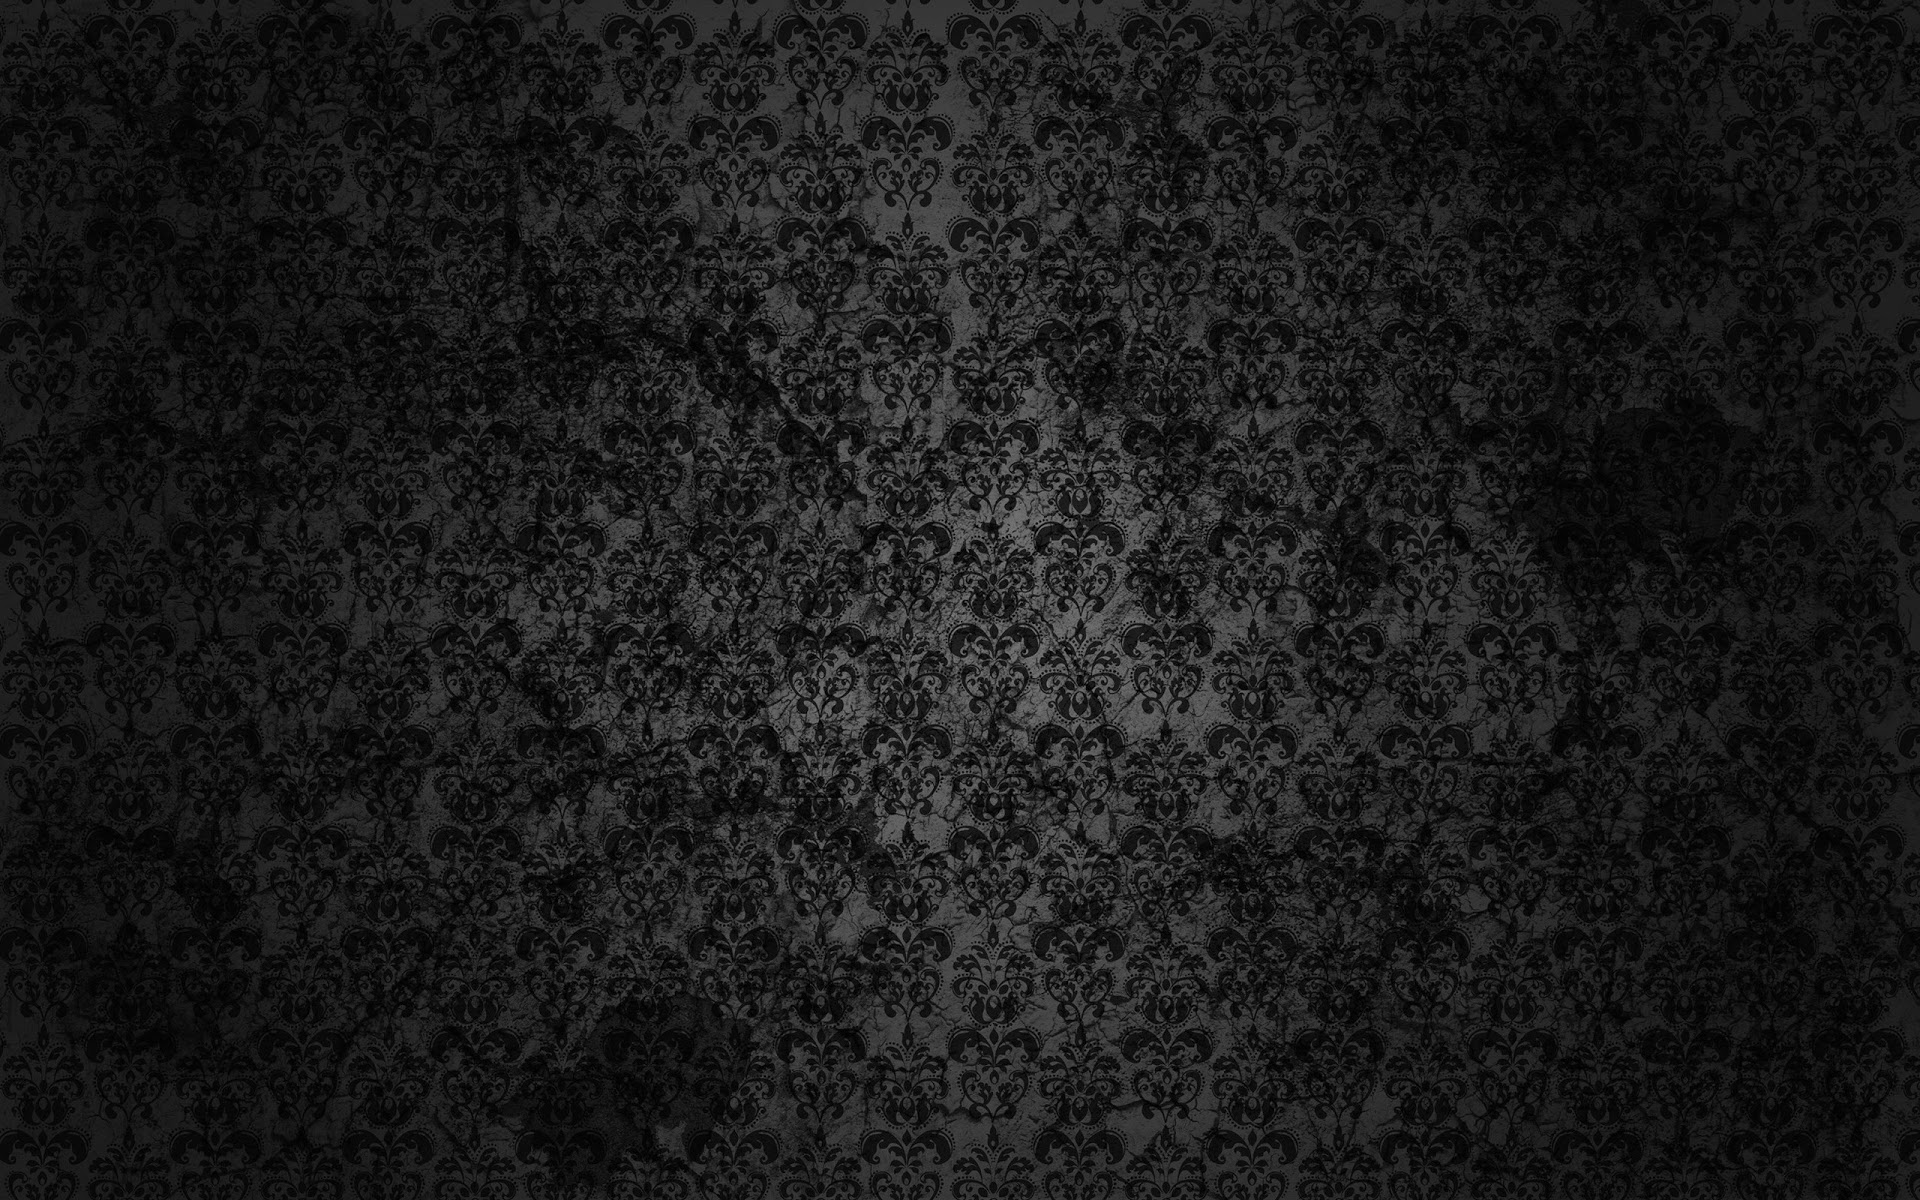 Black Floral Grunge Full HD Desktop Wallpaper 1080p